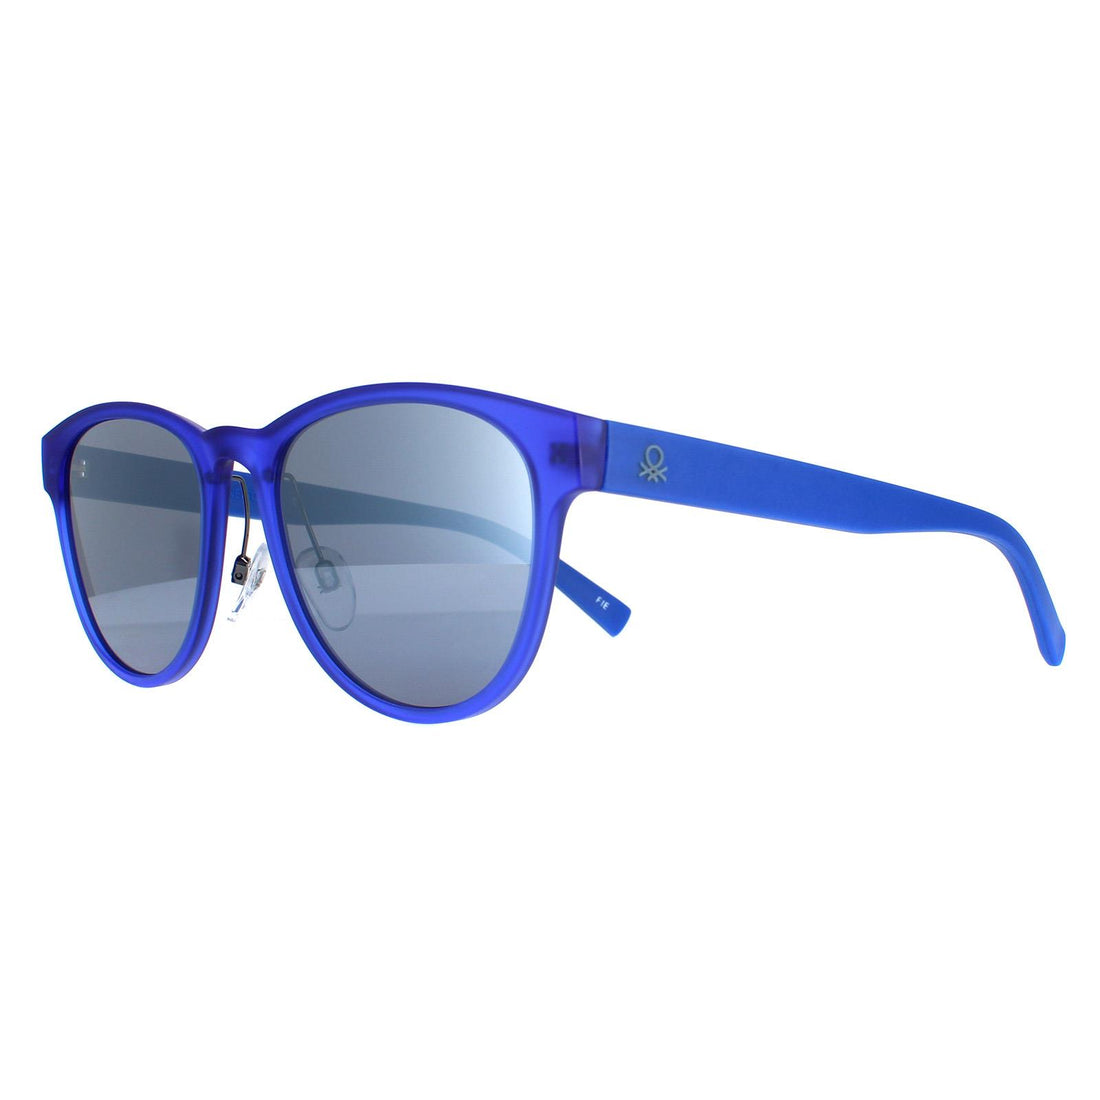 Benetton Sunglasses BE5011 603 Blue Silver Mirrored